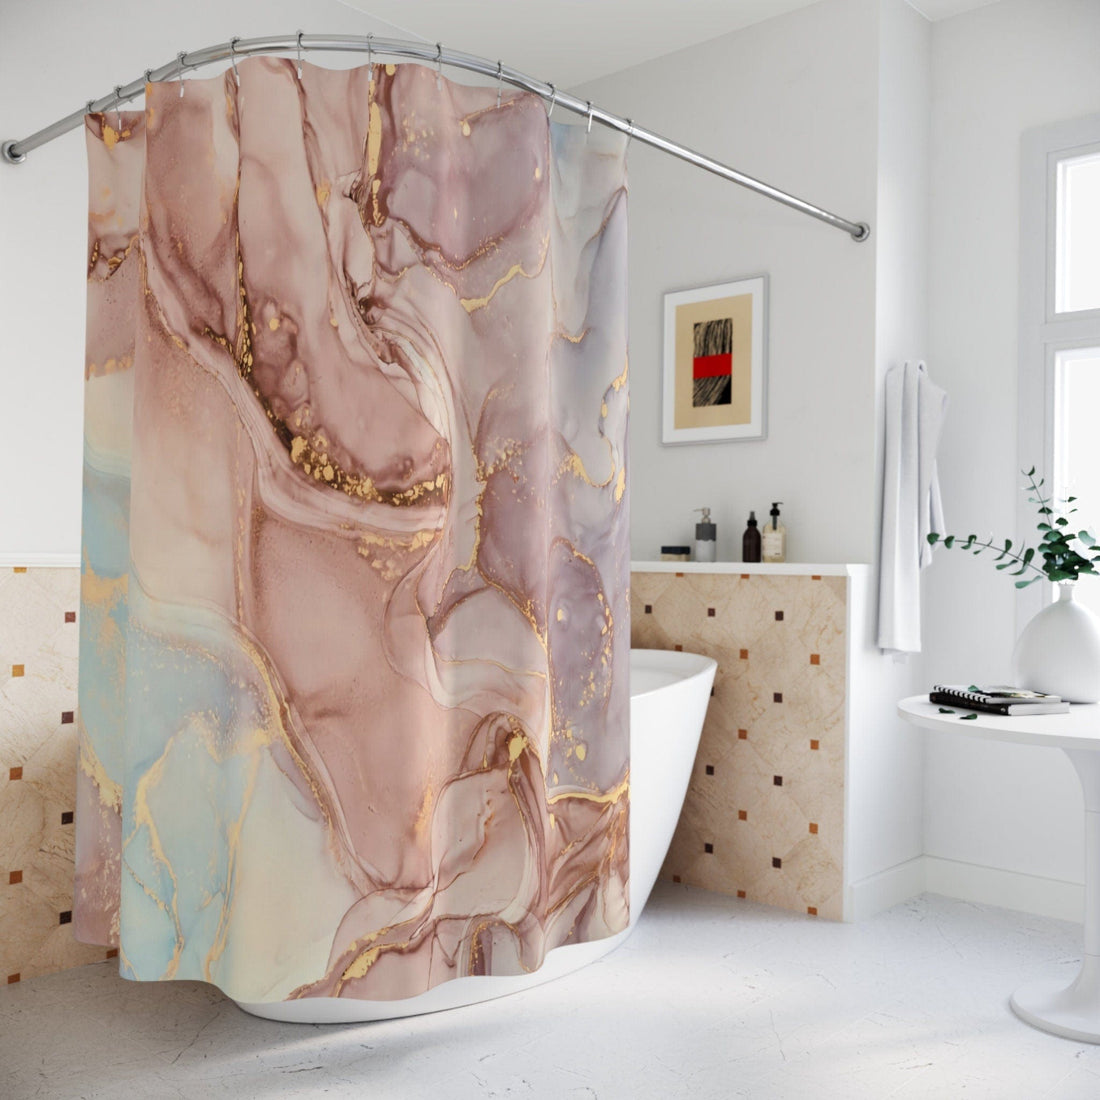 Kate McEnroe New York Shower Curtain in Pastel Peach, Blue, Gold Marble Print, Custom Designed, Waterproof, Machine Washable Standard Fit Bath CurtainsShower CurtainsS40 - MAR - PEA - 7X9P